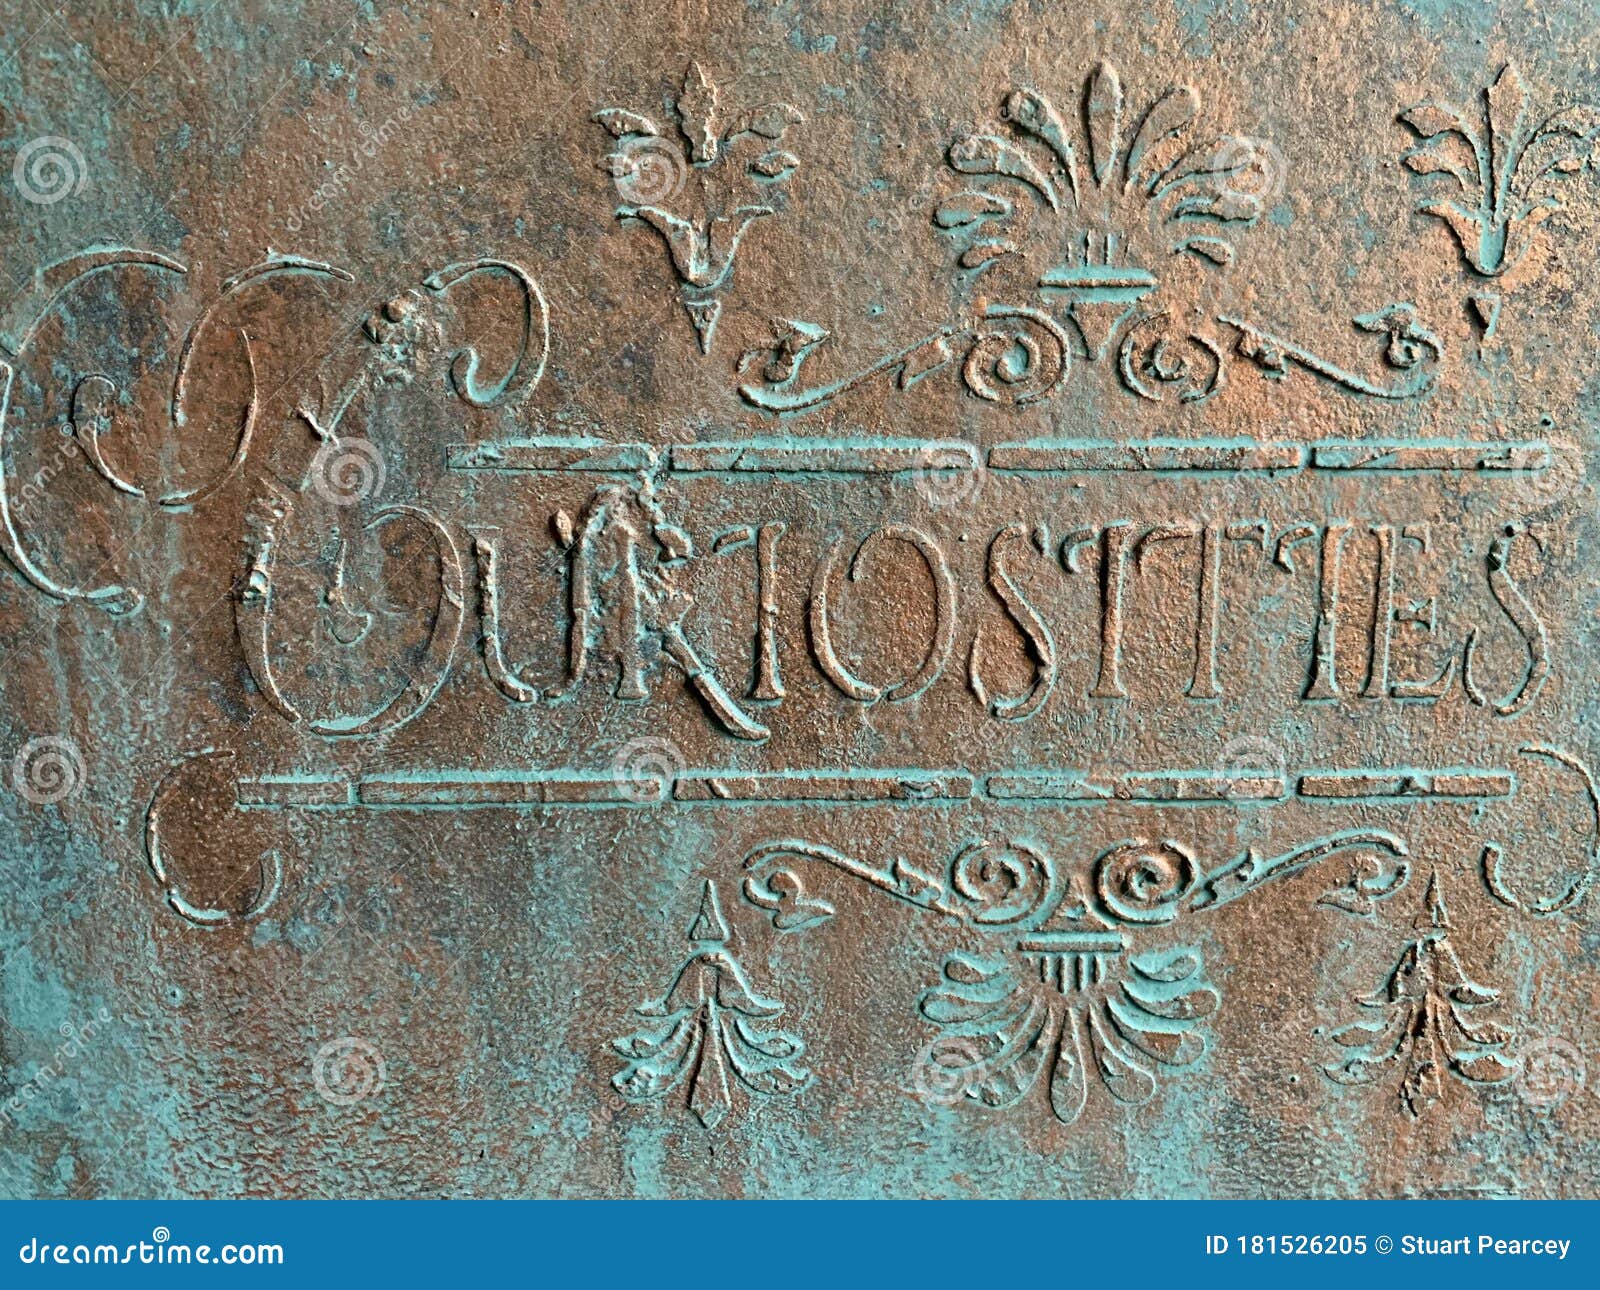 curiosities sign in bronze and verdigris